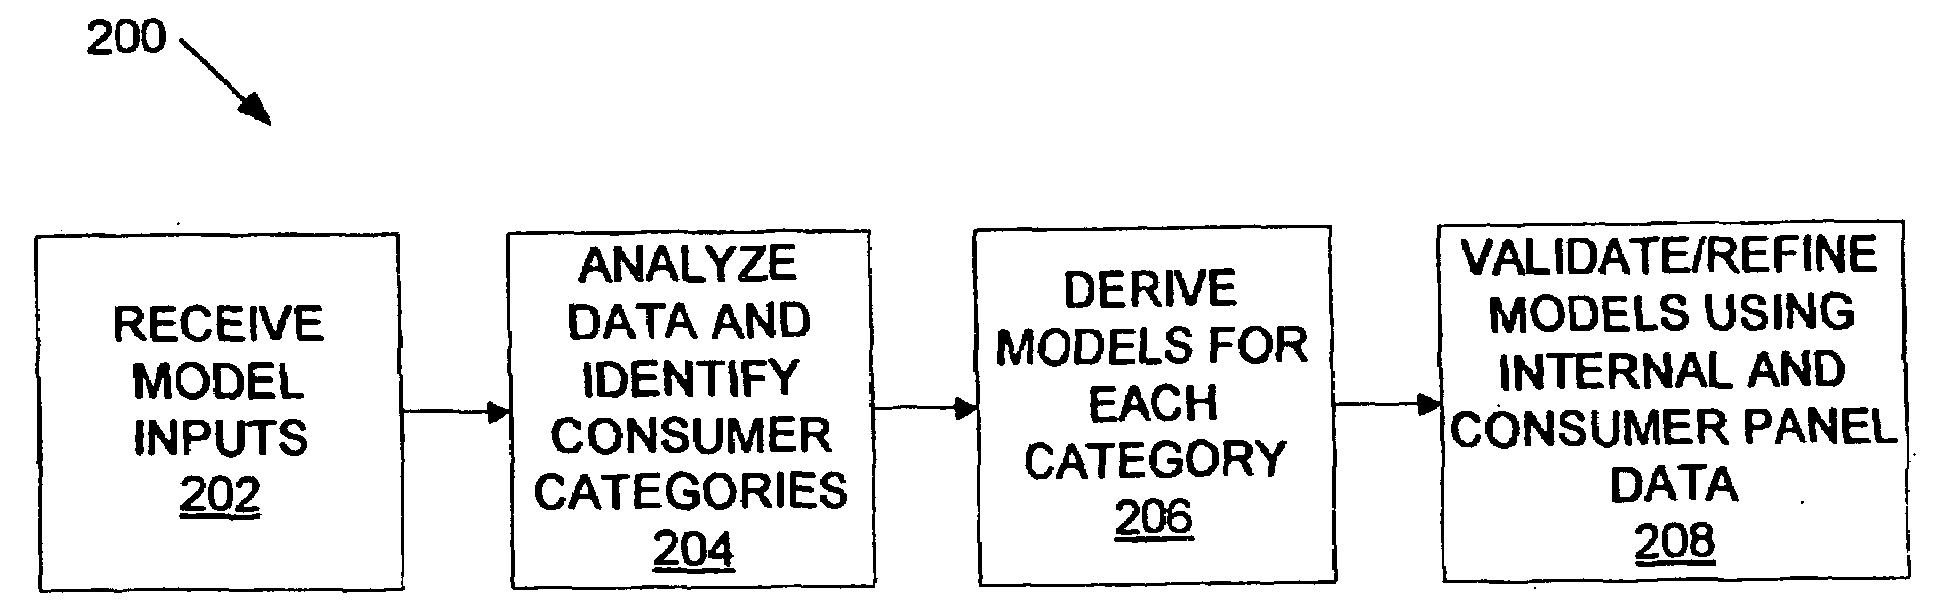 Computer-based modeling of spending behaviors of entities